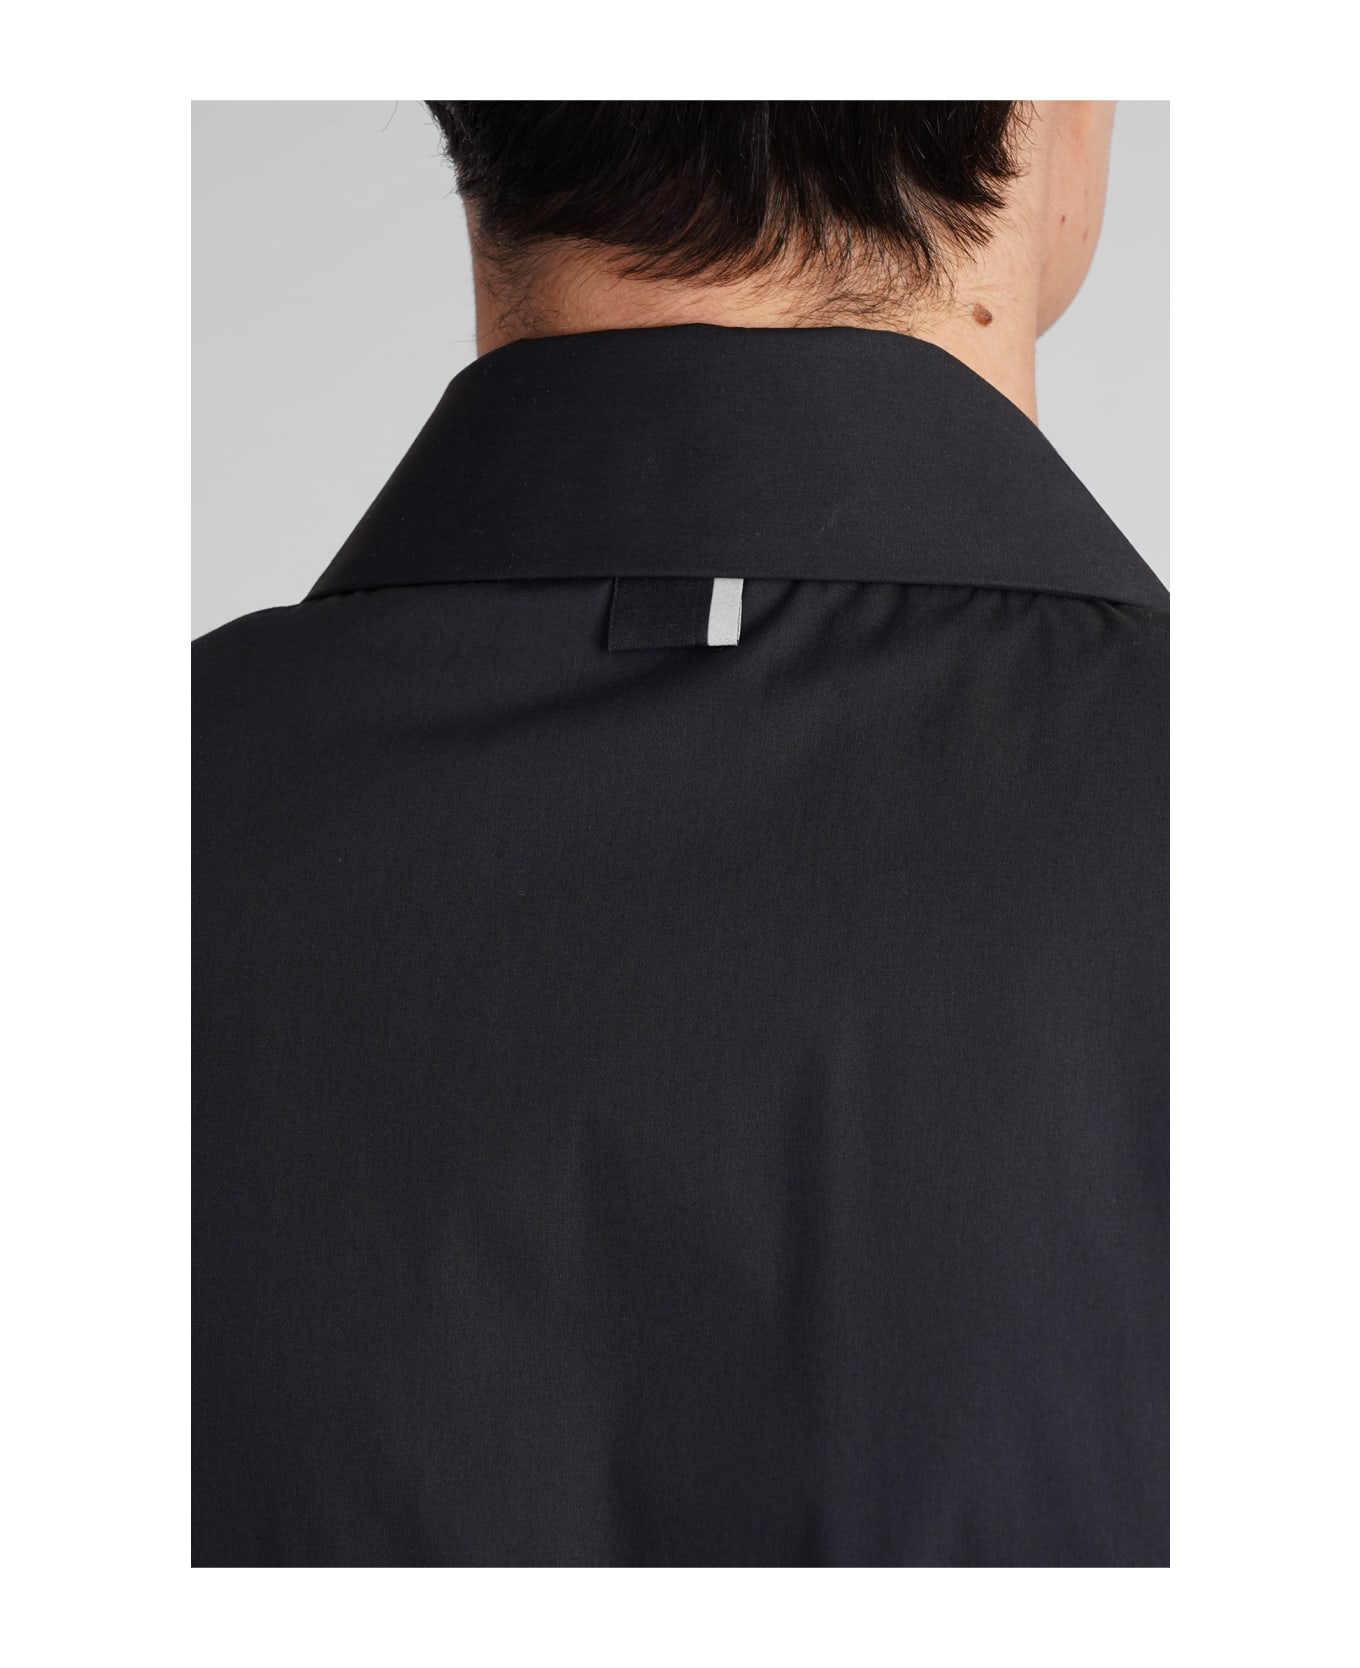 Low Brand Shirt Zip S143 Shirt In Black Cotton - black